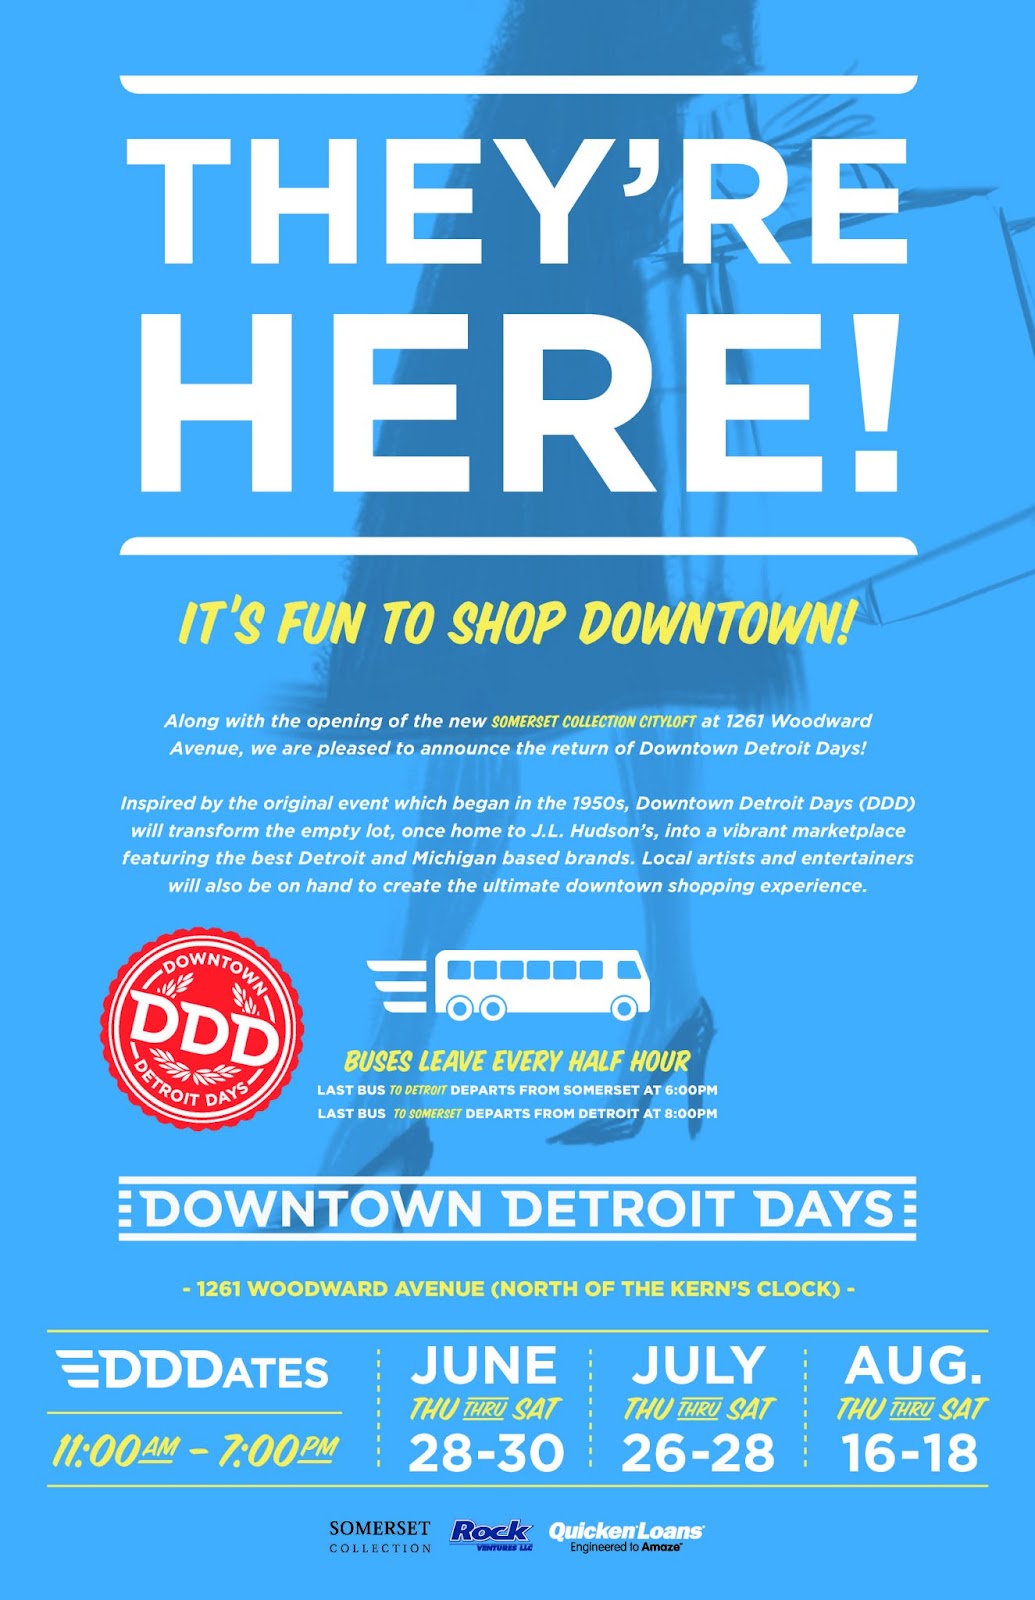 Somerset Collection CityLoft to return to downtown Detroit next